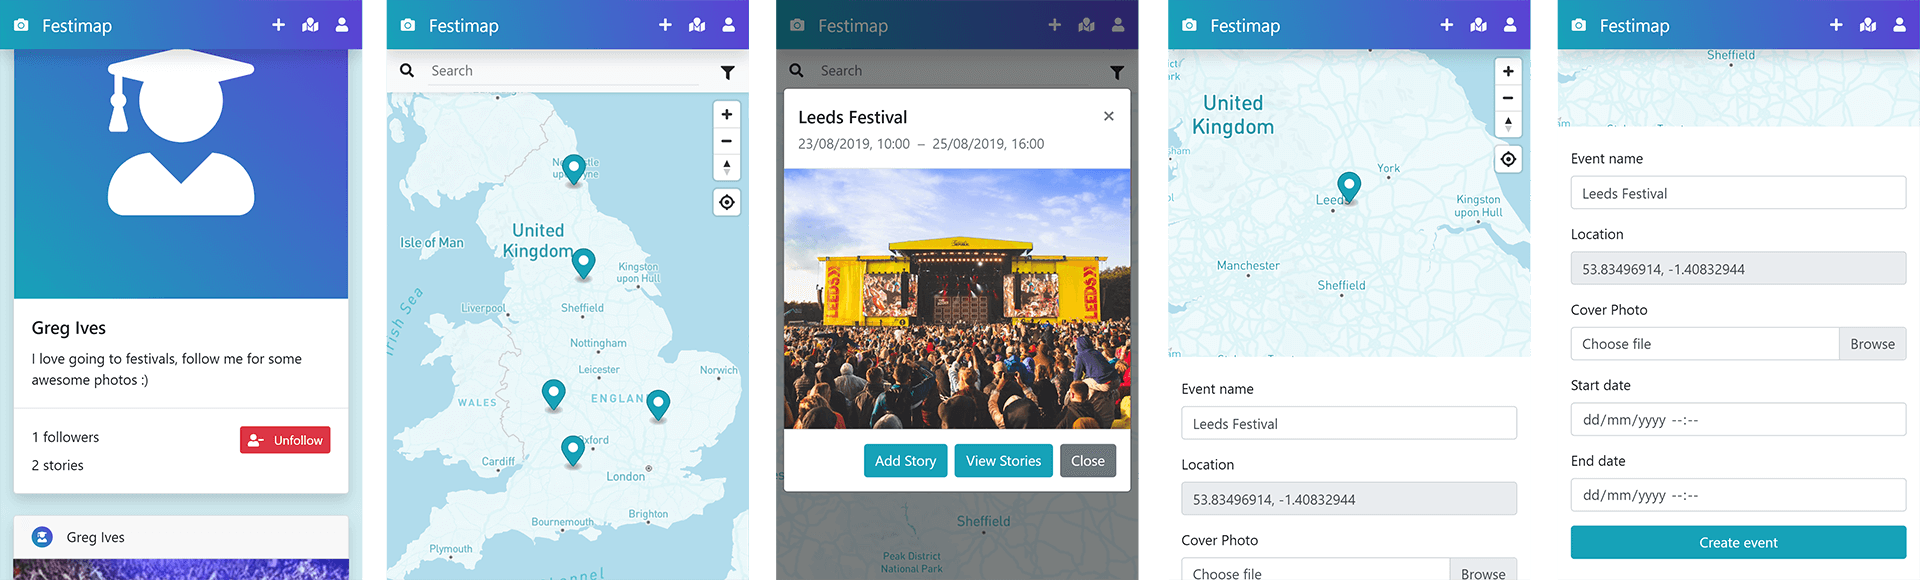 Screenshots of Festimap app